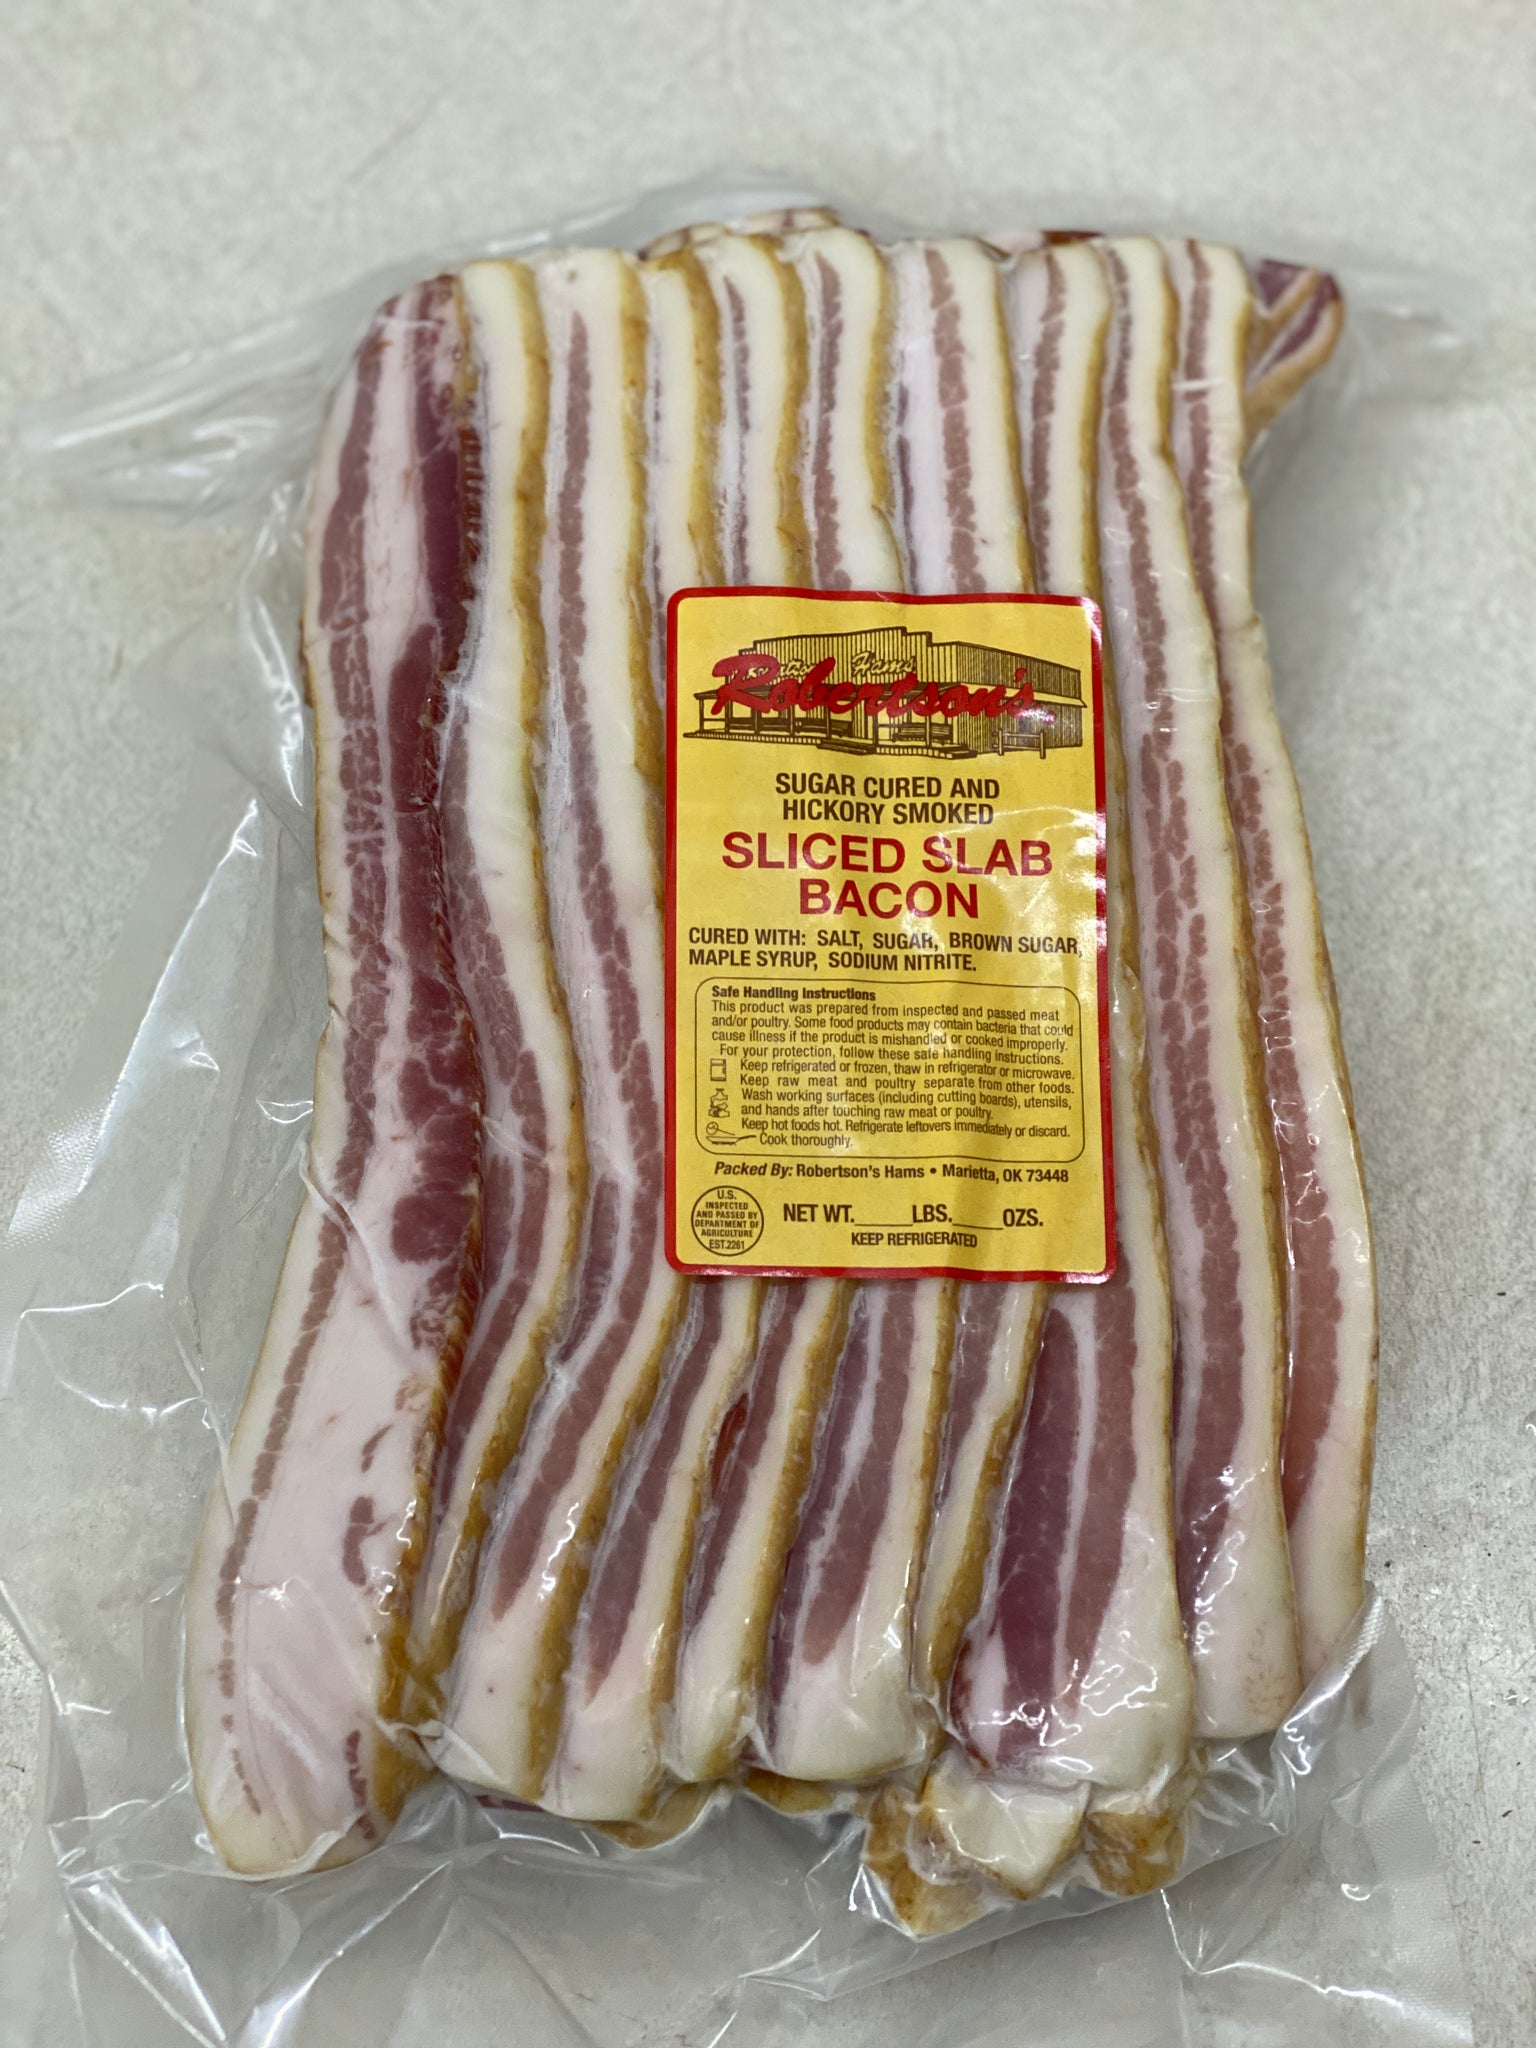 Smoked Bacon